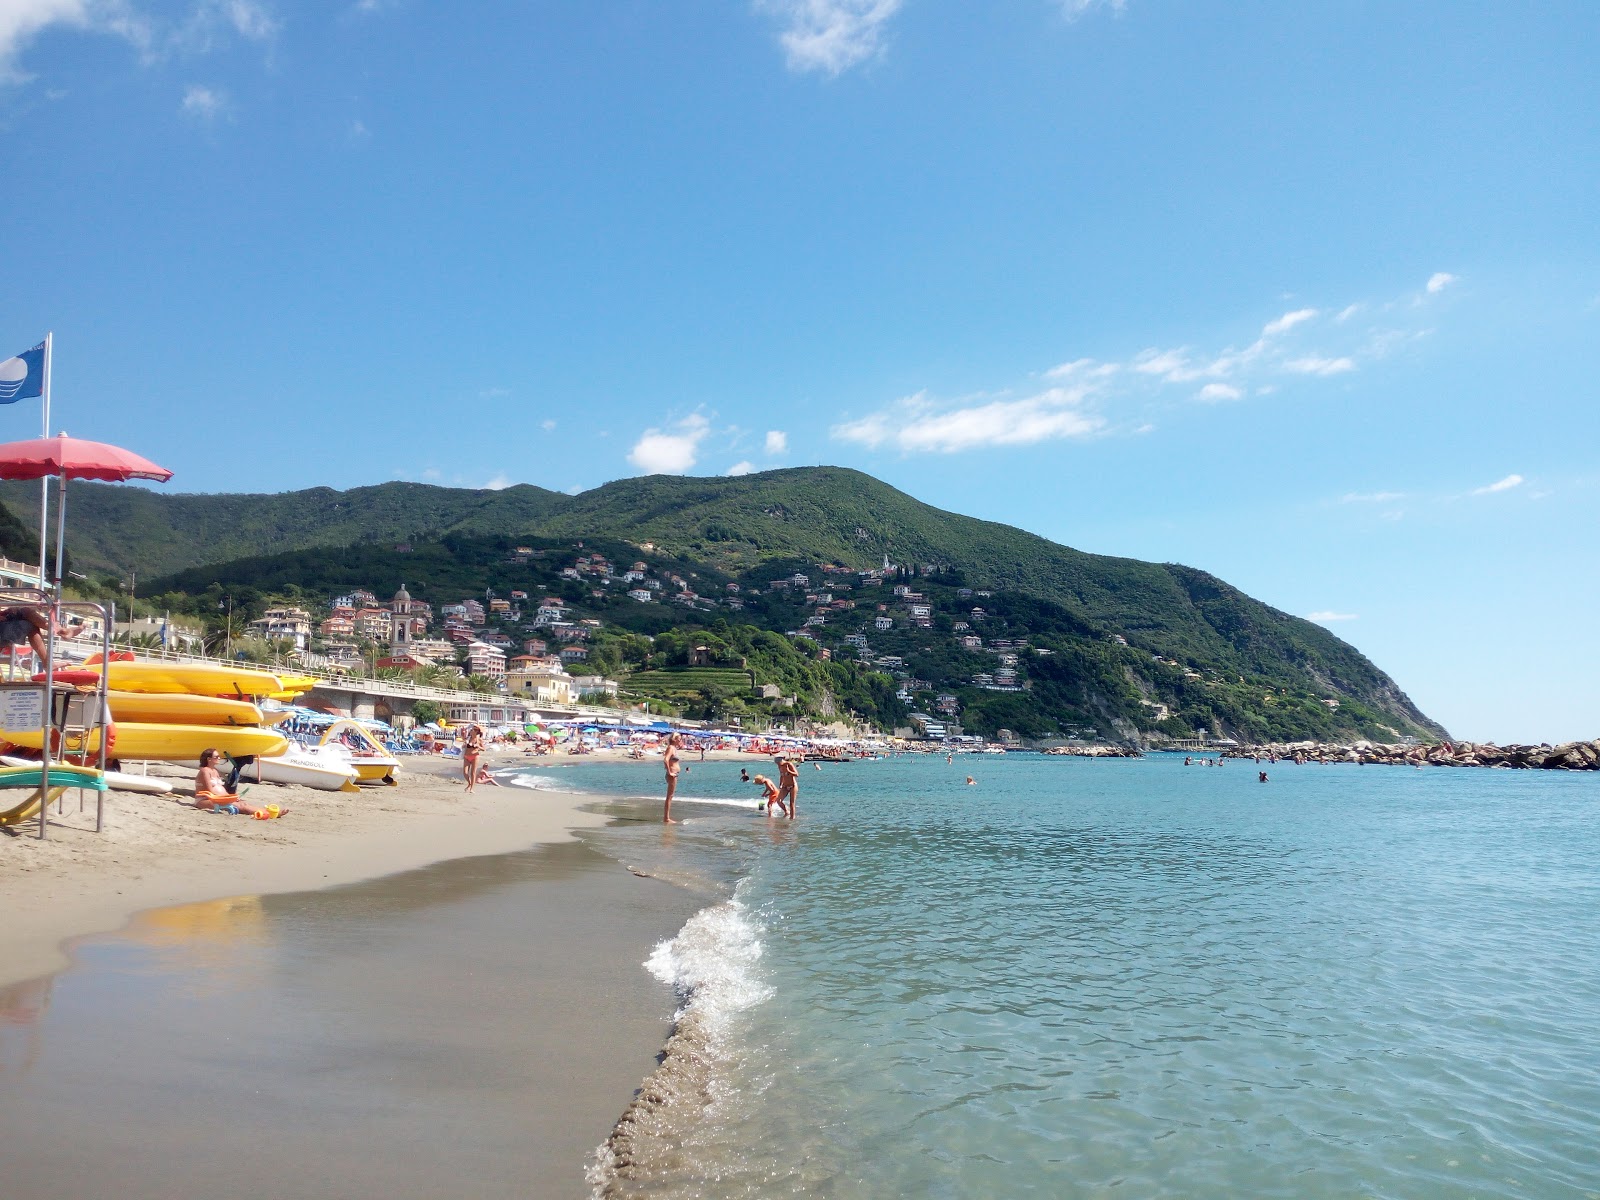 Foto de Spiaggia Moneglia área de resort de praia